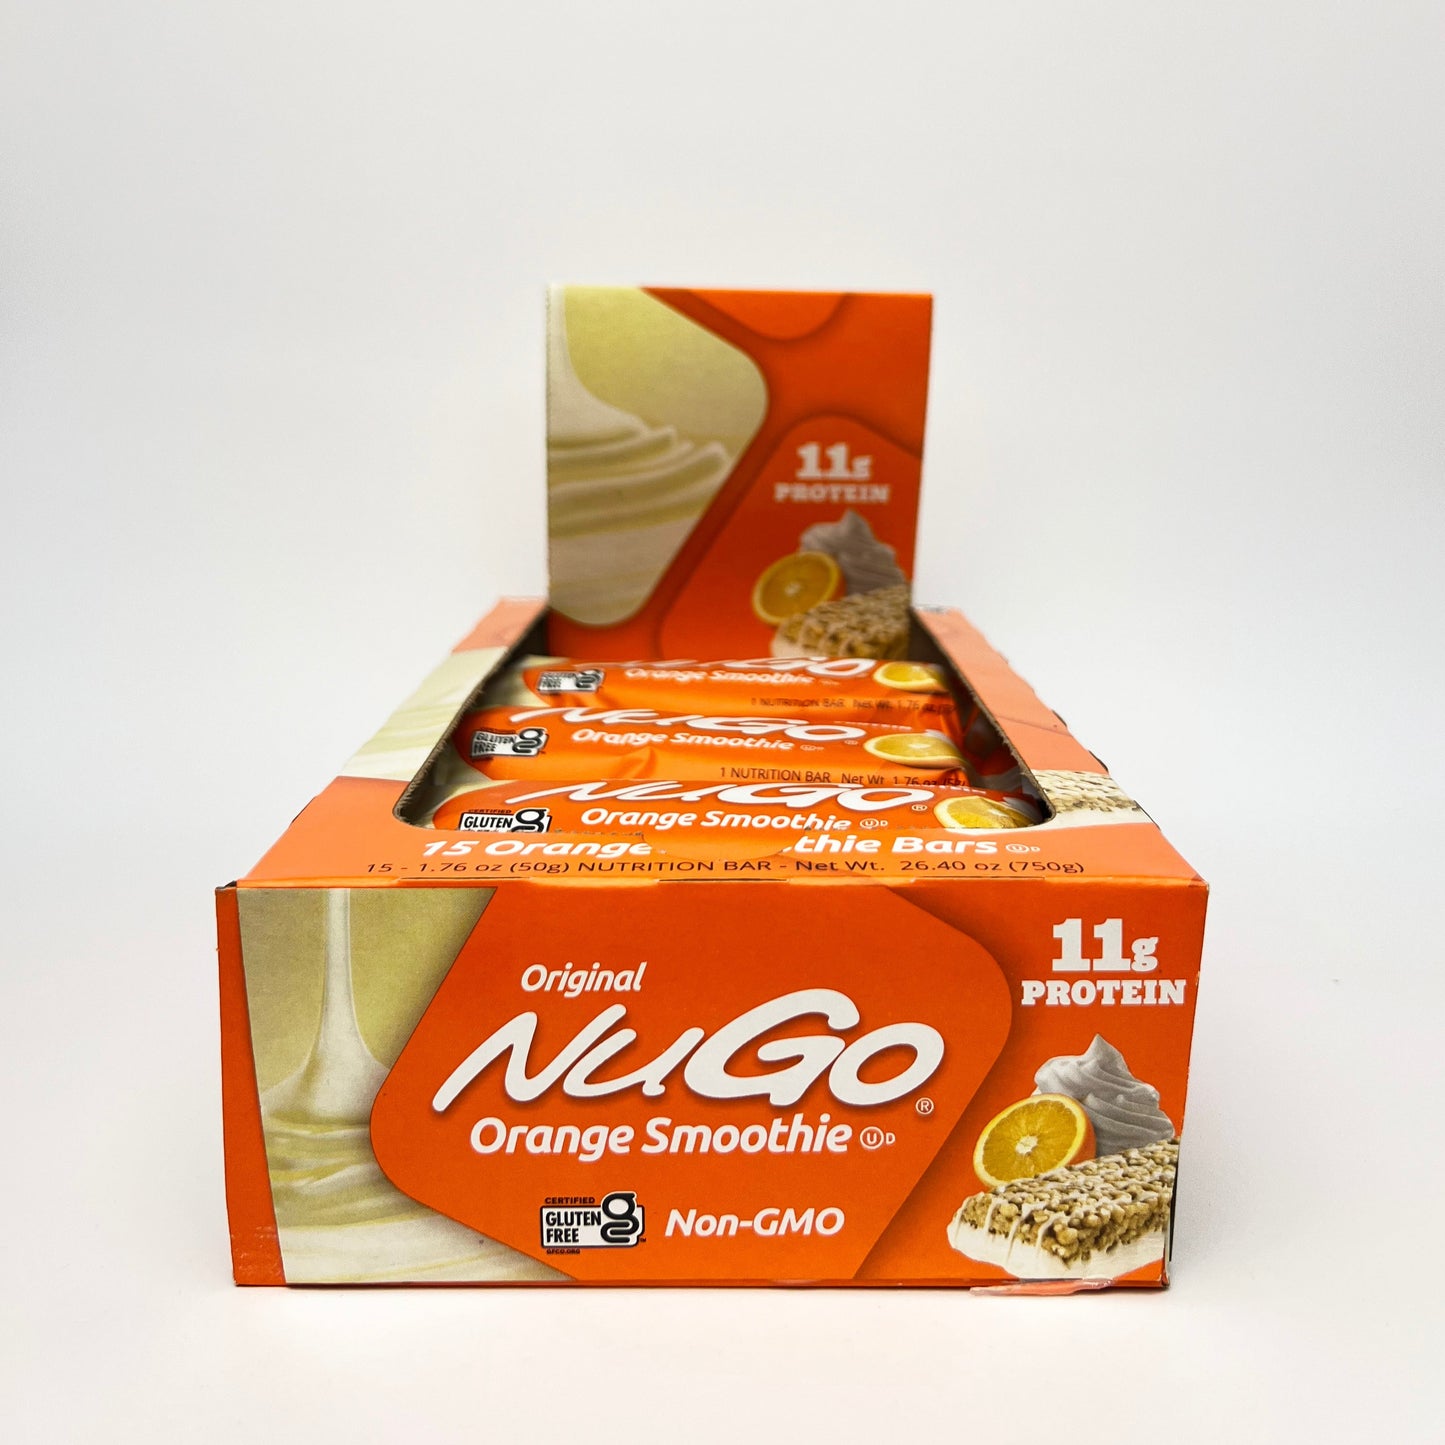 NuGo Nutritional Bar